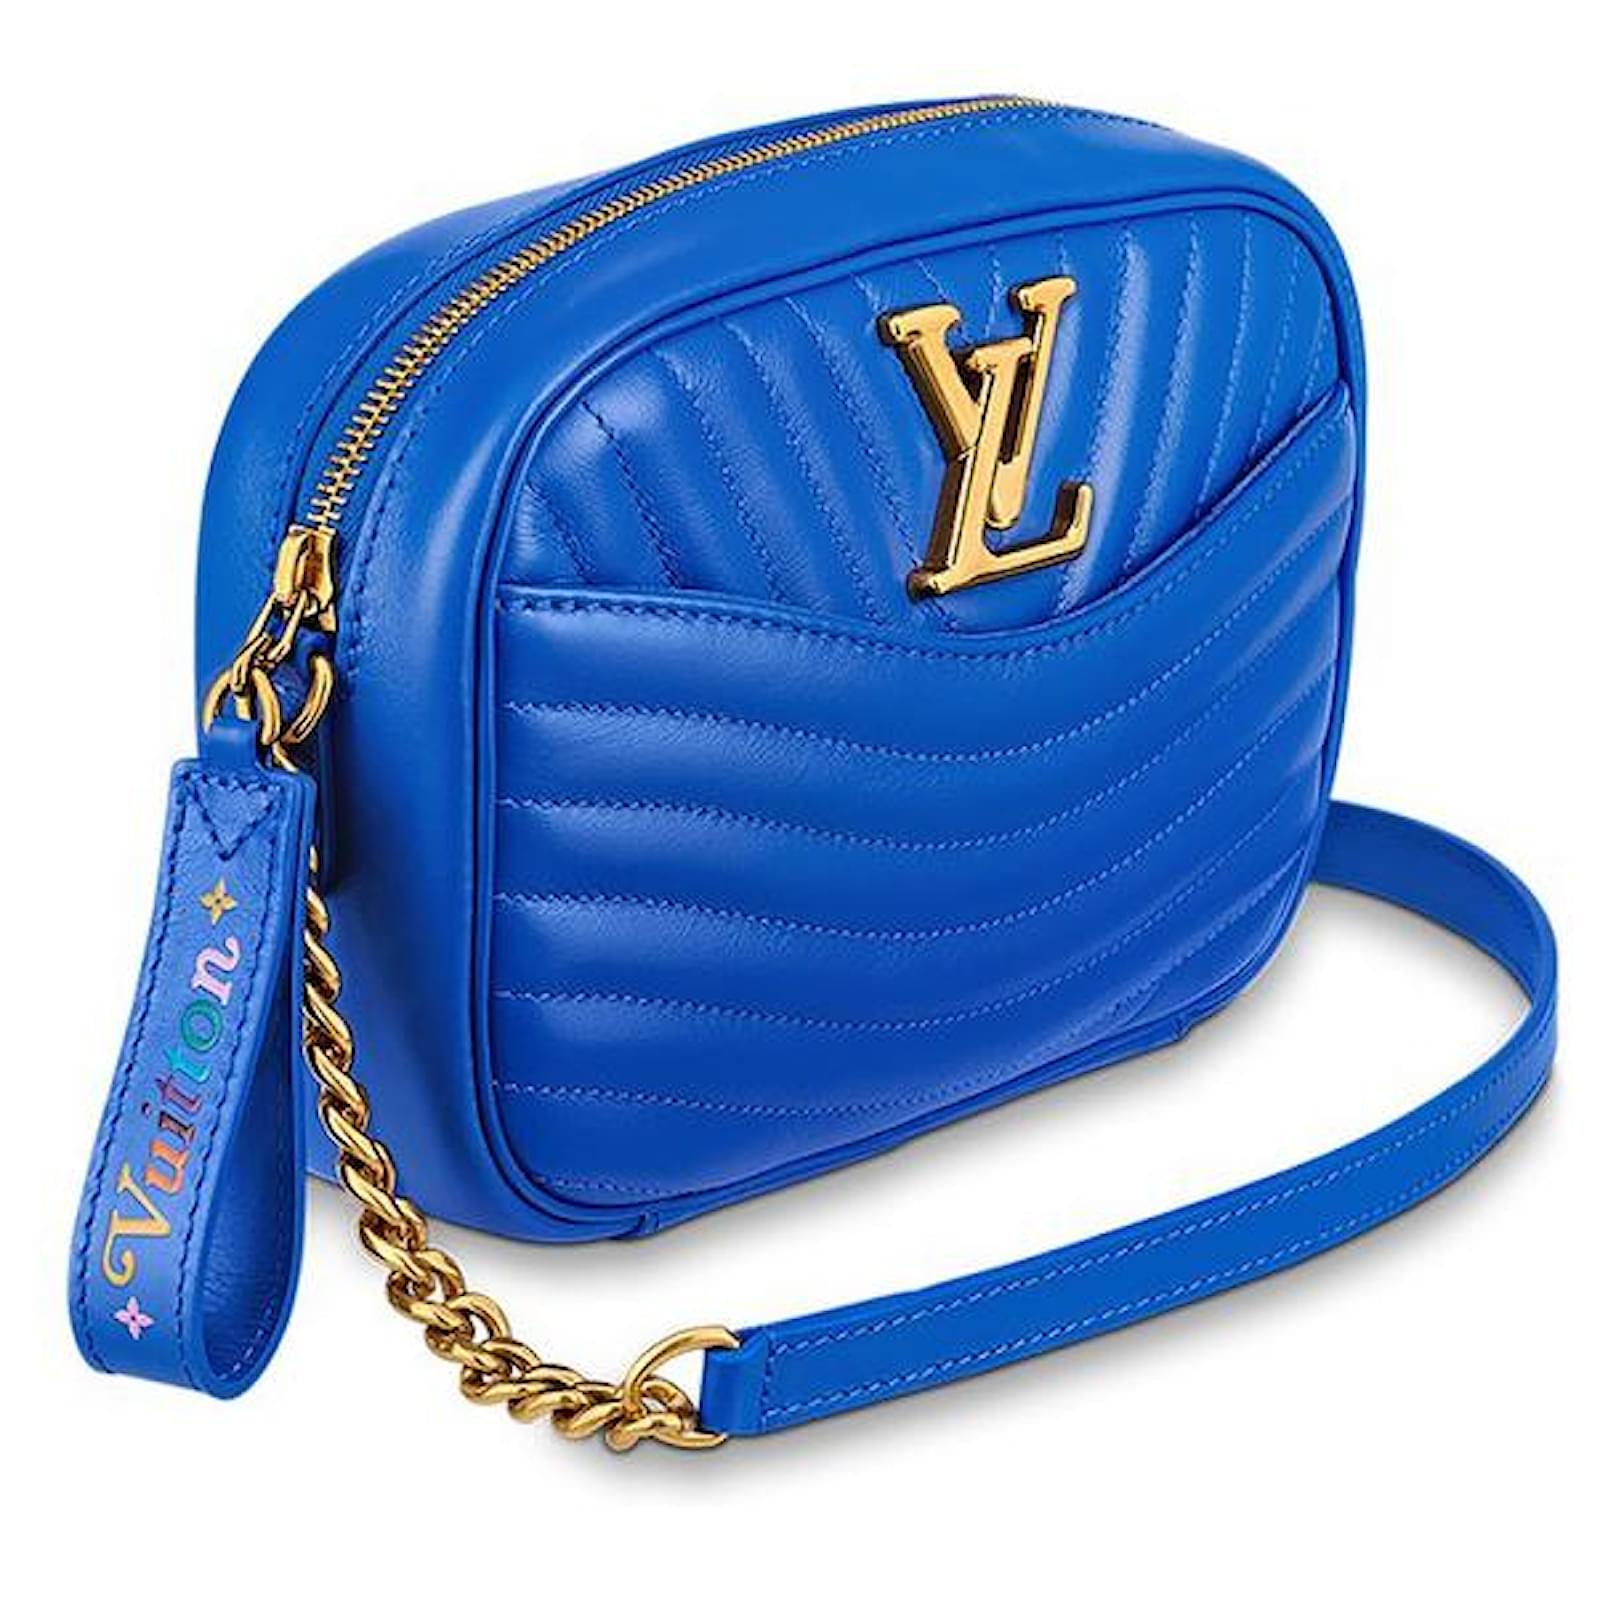 Louis Vuitton Wave Bag Reviewed